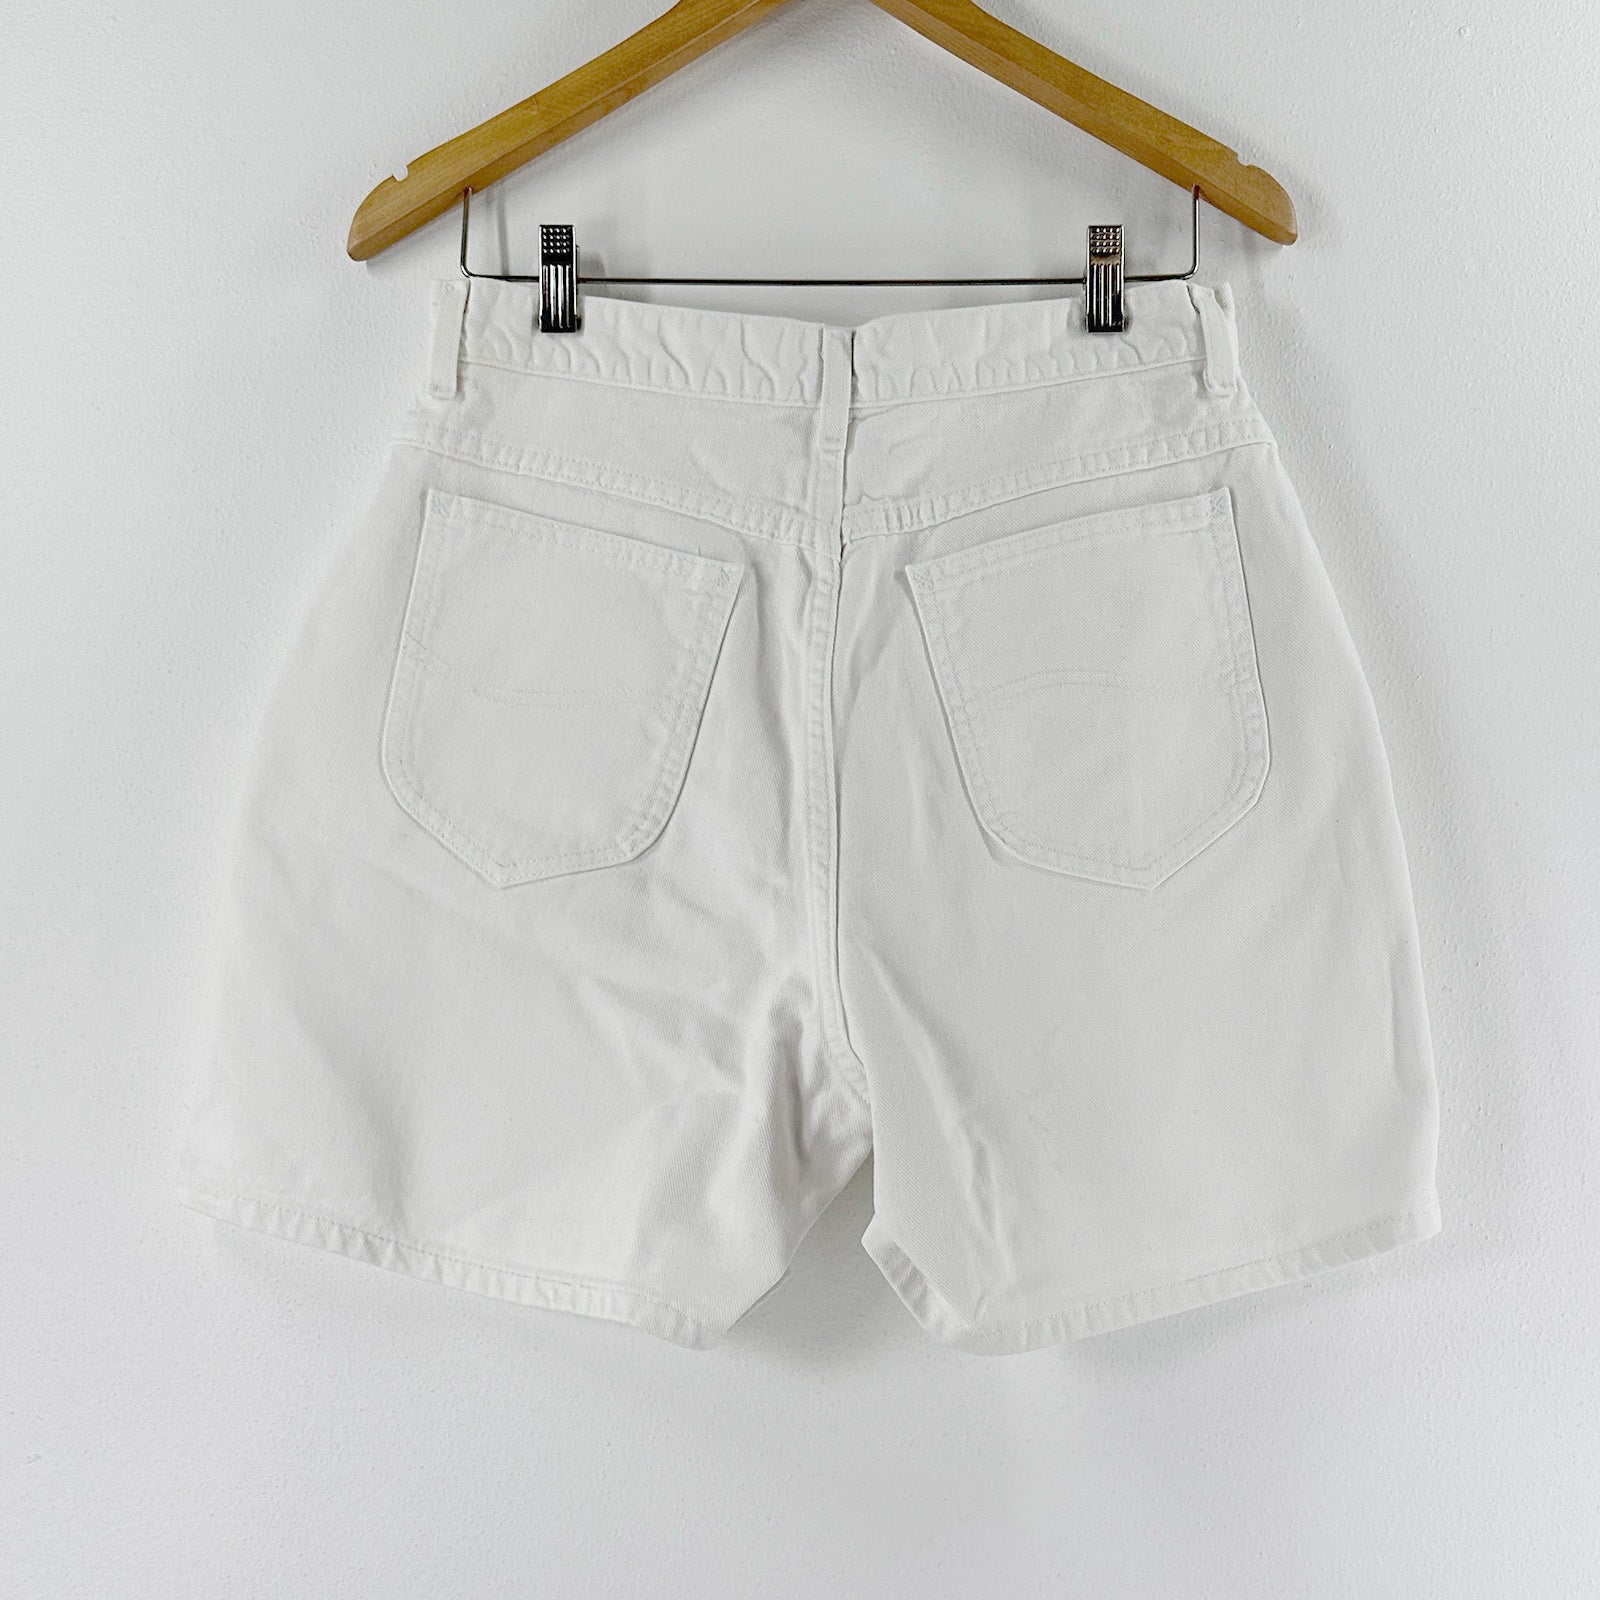 Vintage Lee Shorts - 100% Cotton - 29 Waist Great Lakes Reclaimed Denim